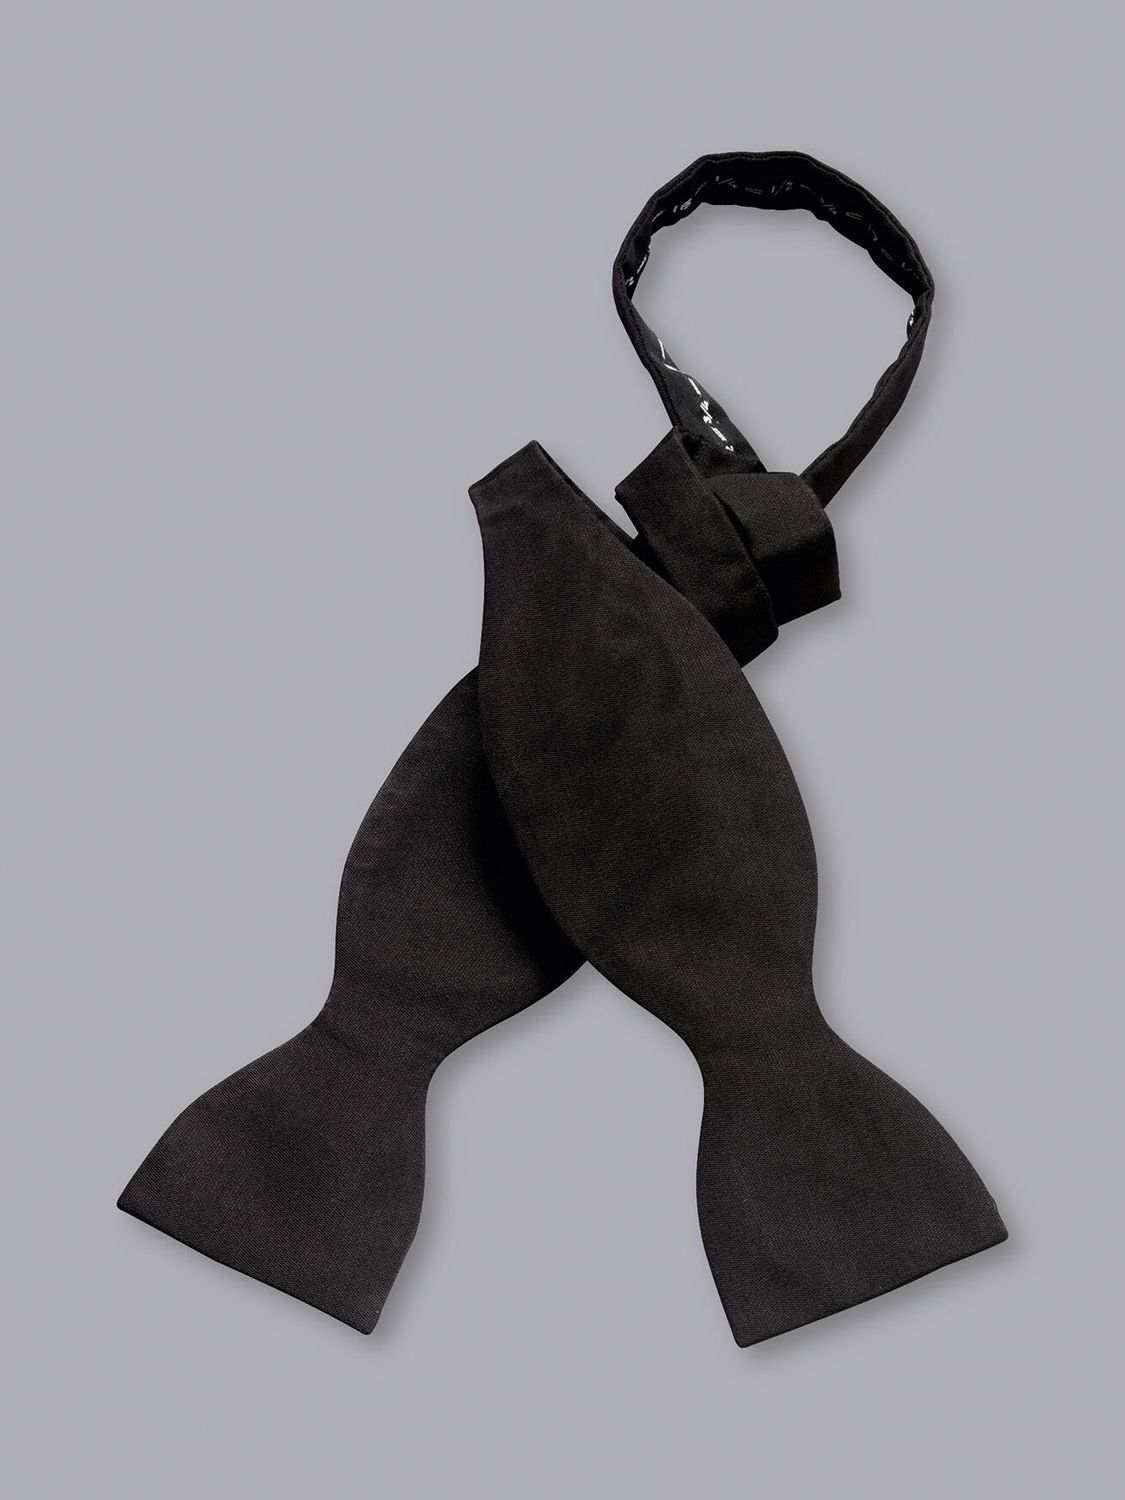 Charles Tyrwhitt Barathea Silk Bow Tie, Black, One Size